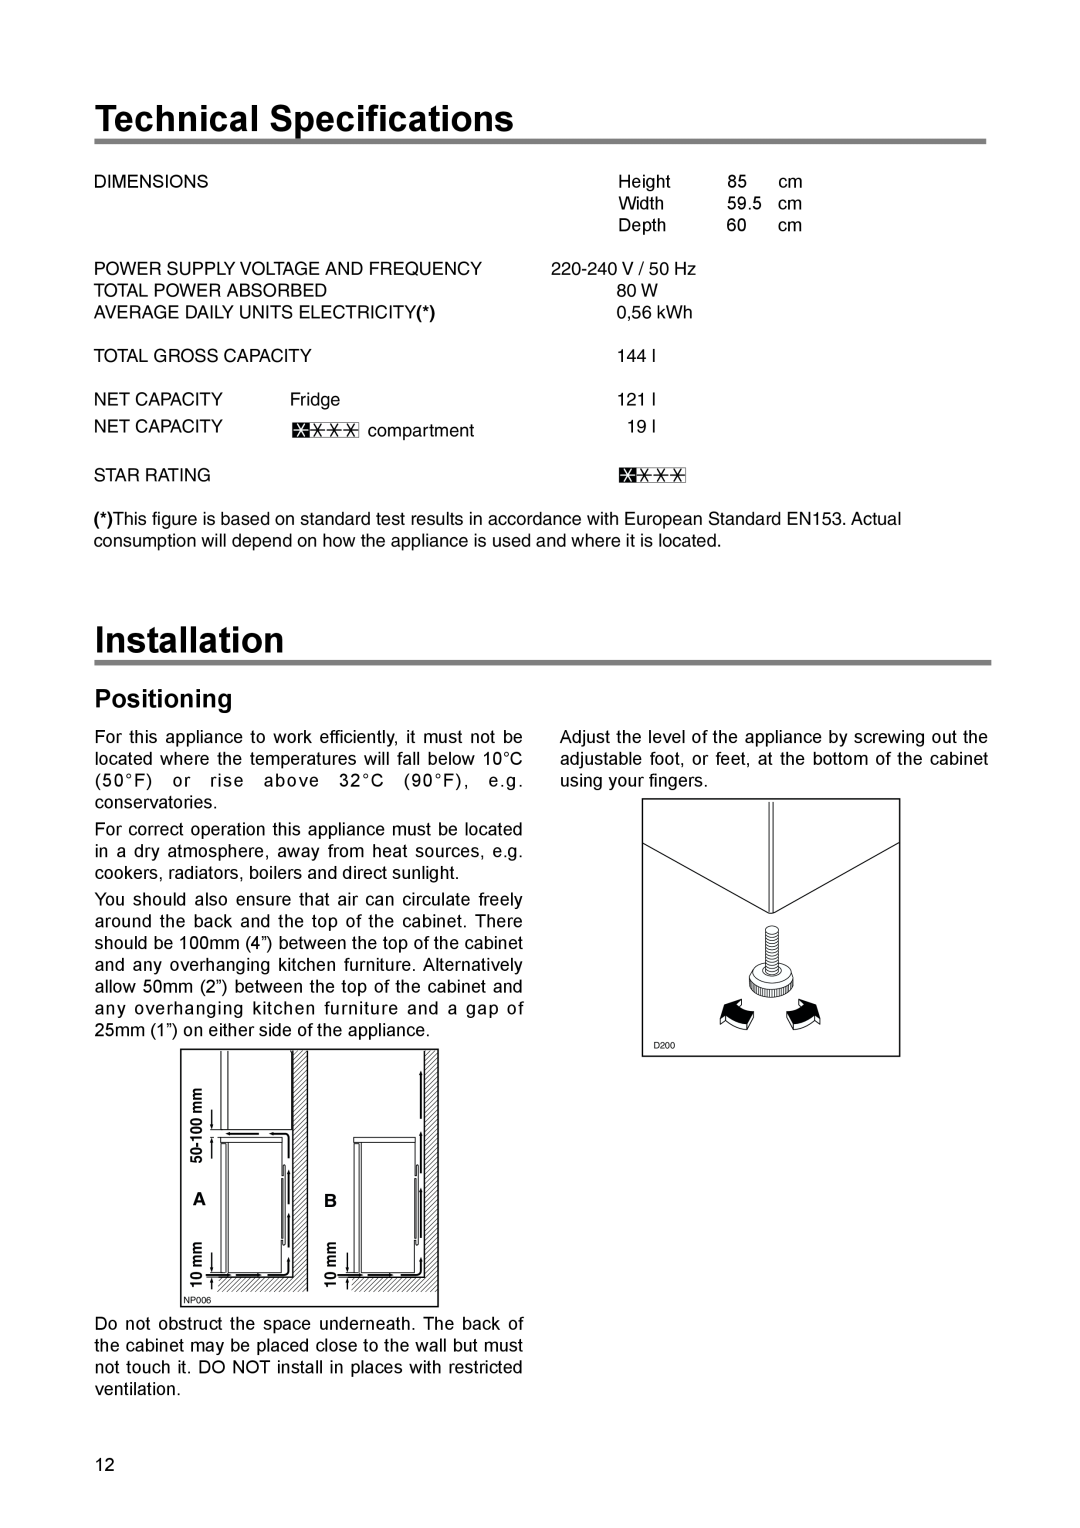 Zanussi ZERT 6675, ZRT 1675 manual Technical Specifications, Installation, Positioning 